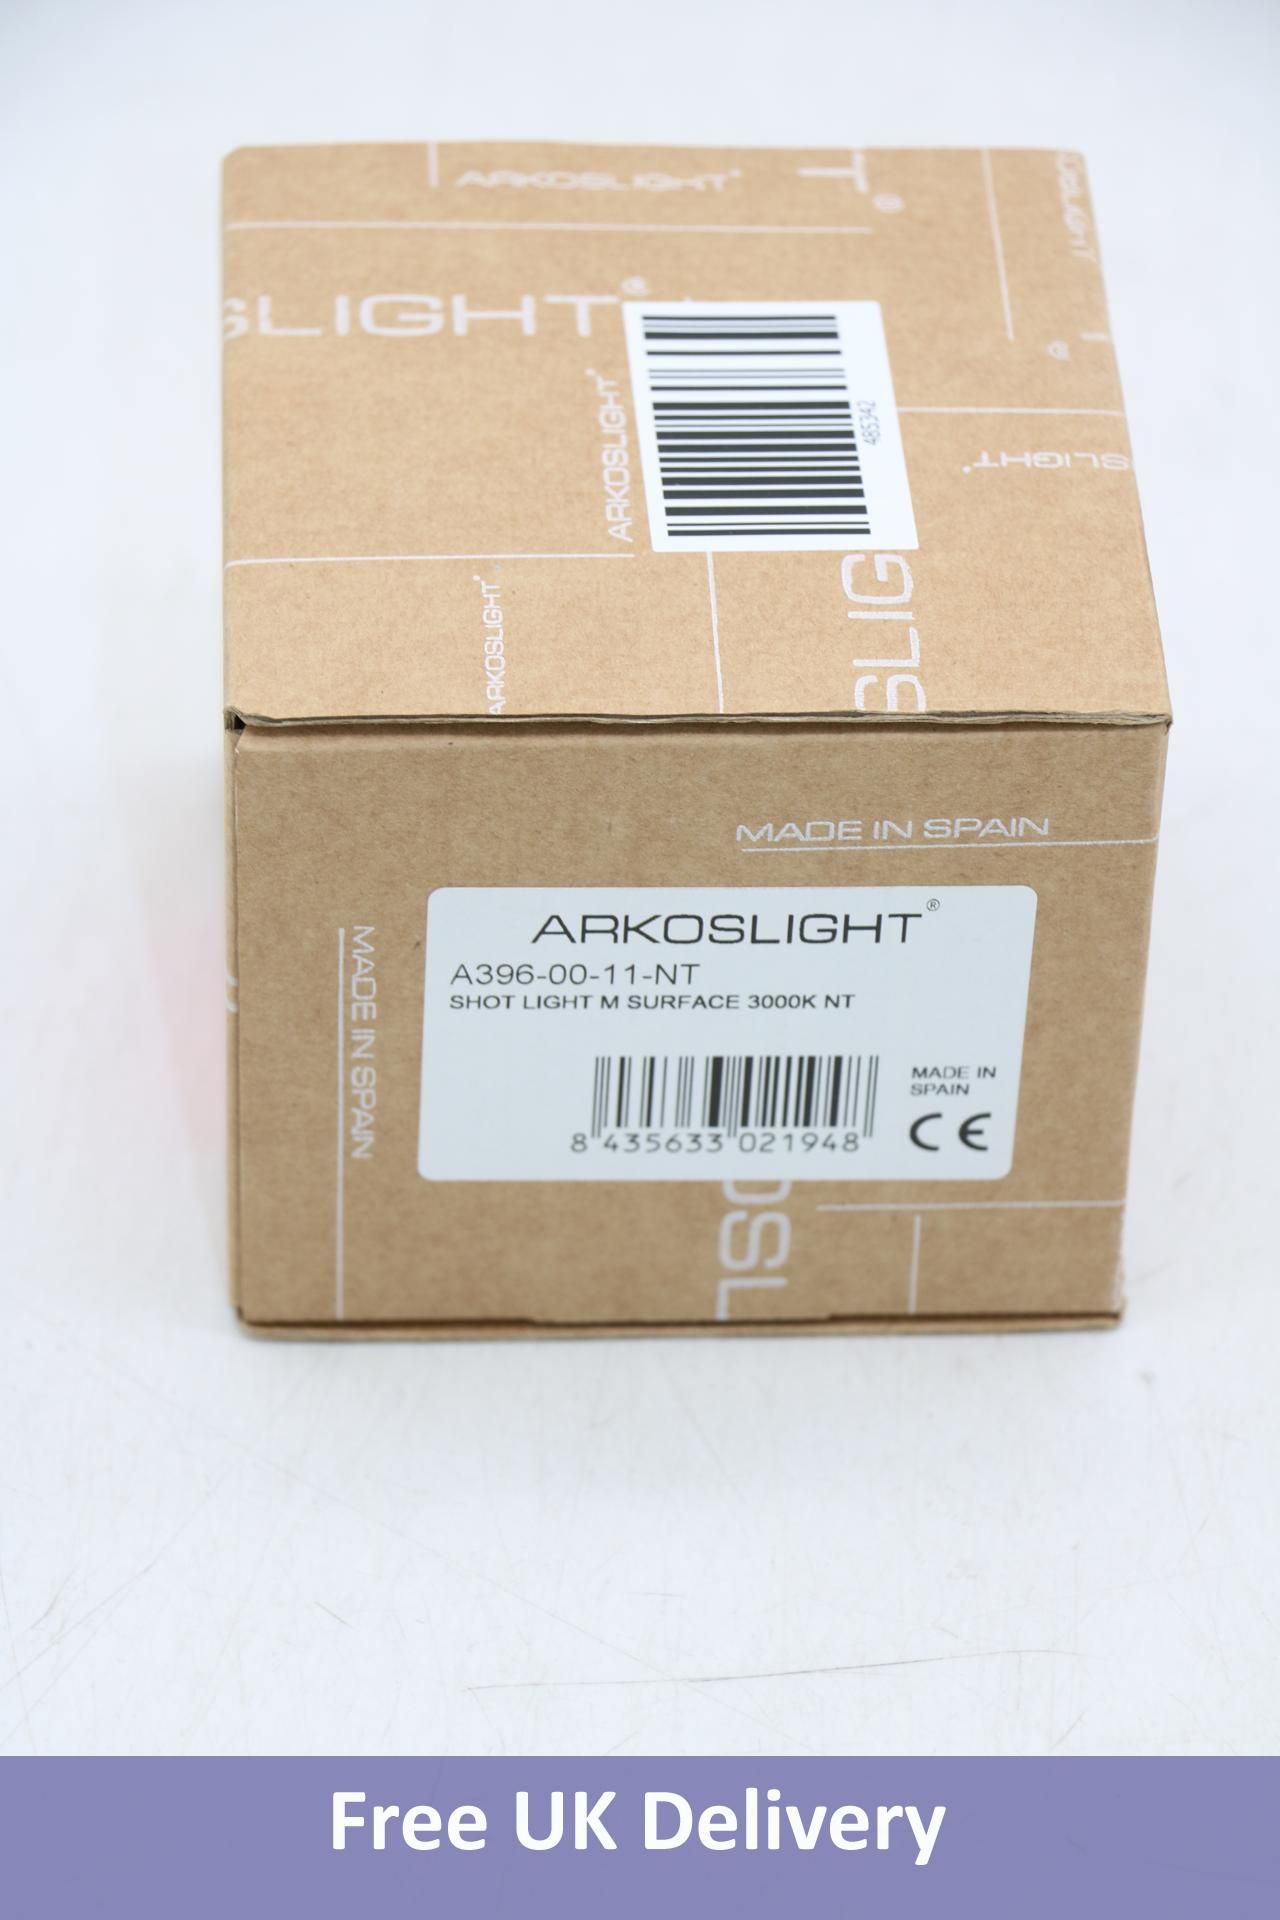 Arkoslight Shot Down Light M Surface White, 3000K, A396-00-11-NT